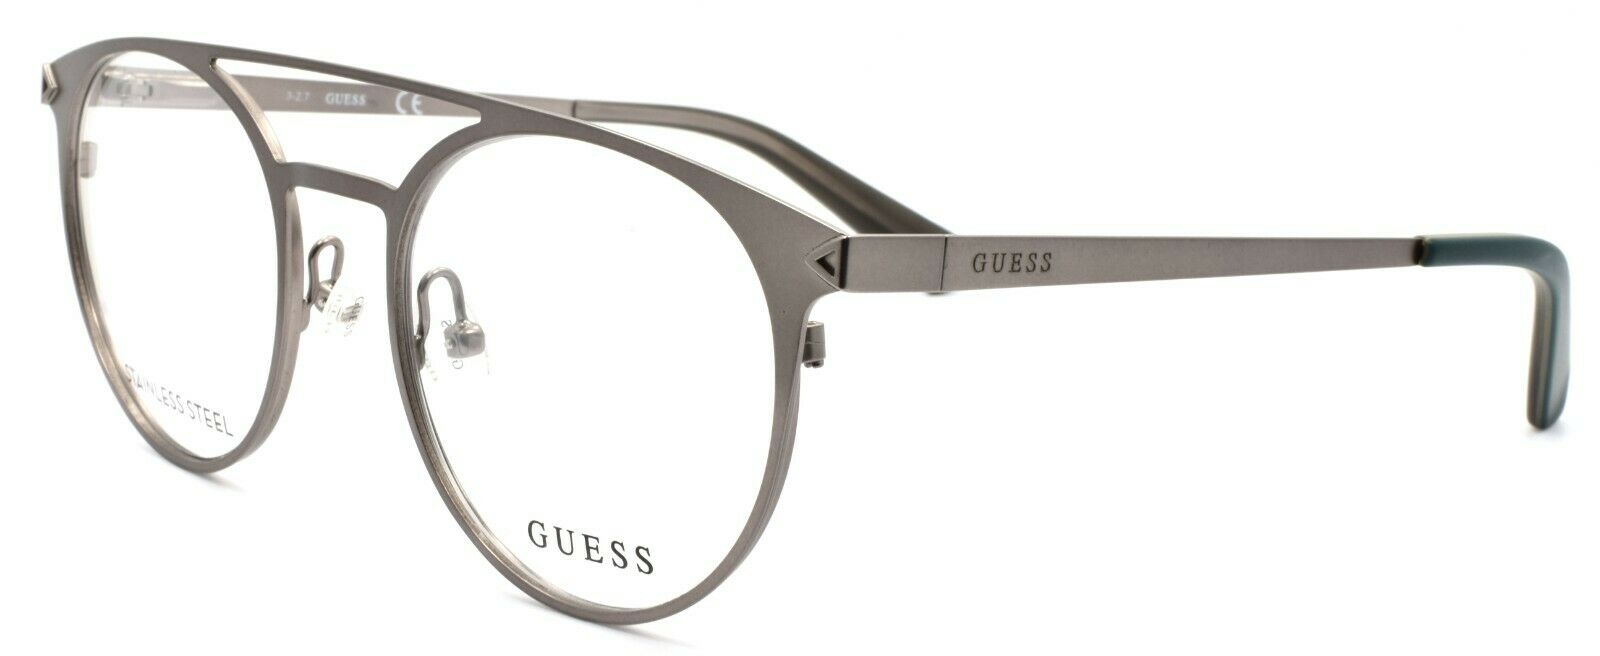 1-GUESS GU1956 009 Men's Eyeglasses Frames Aviator Round 50-19-140 Matte Gunmetal-664689952755-IKSpecs